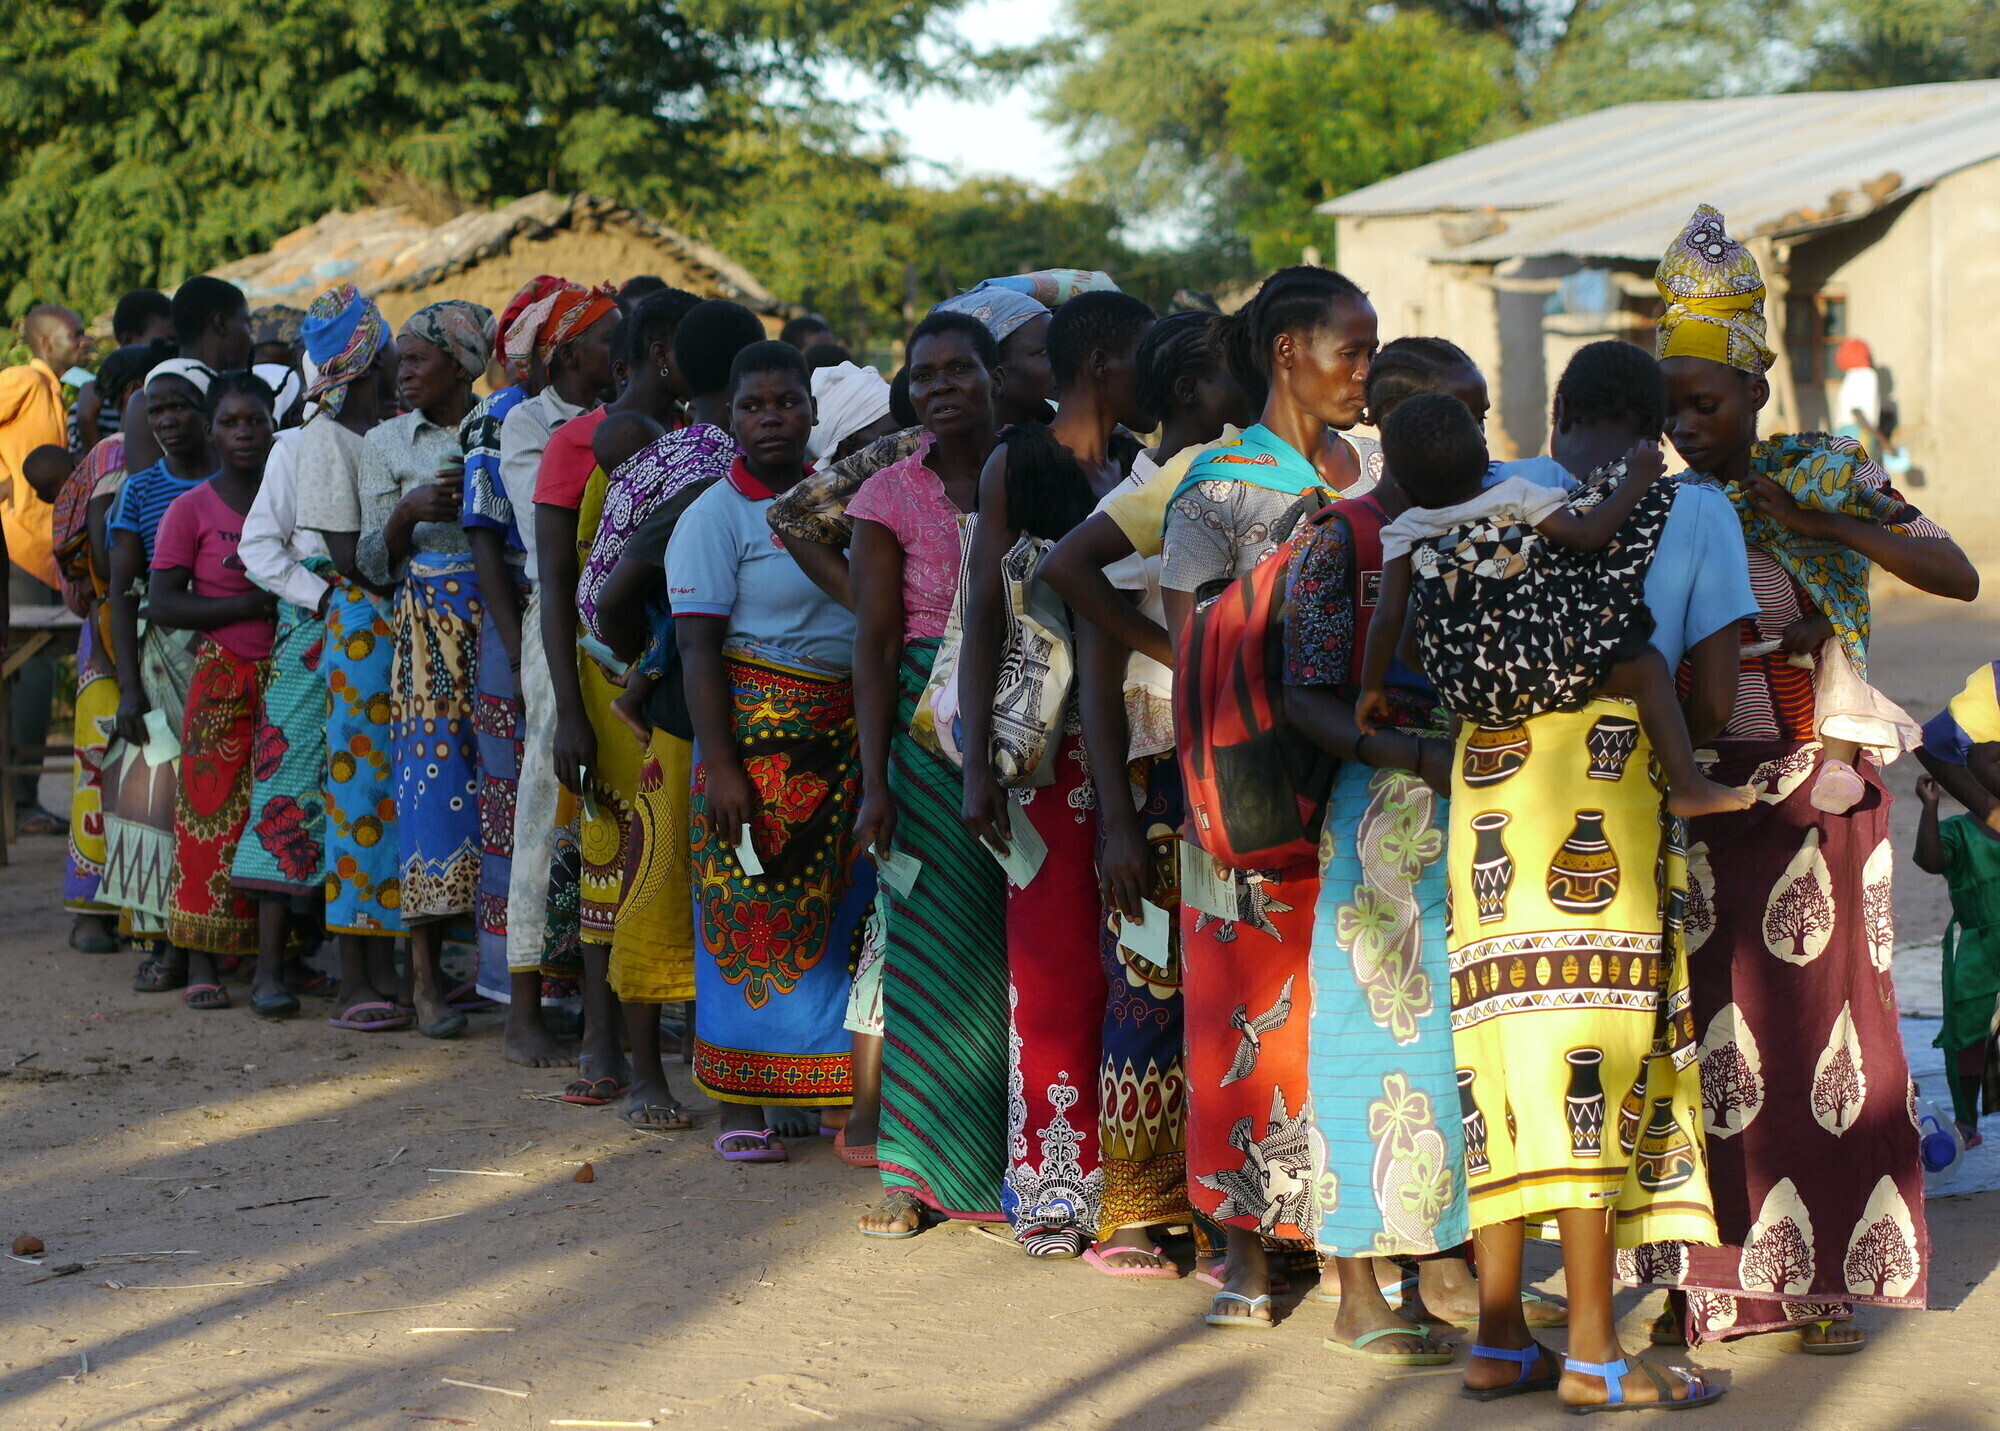 A group of Malawi women wait in a line